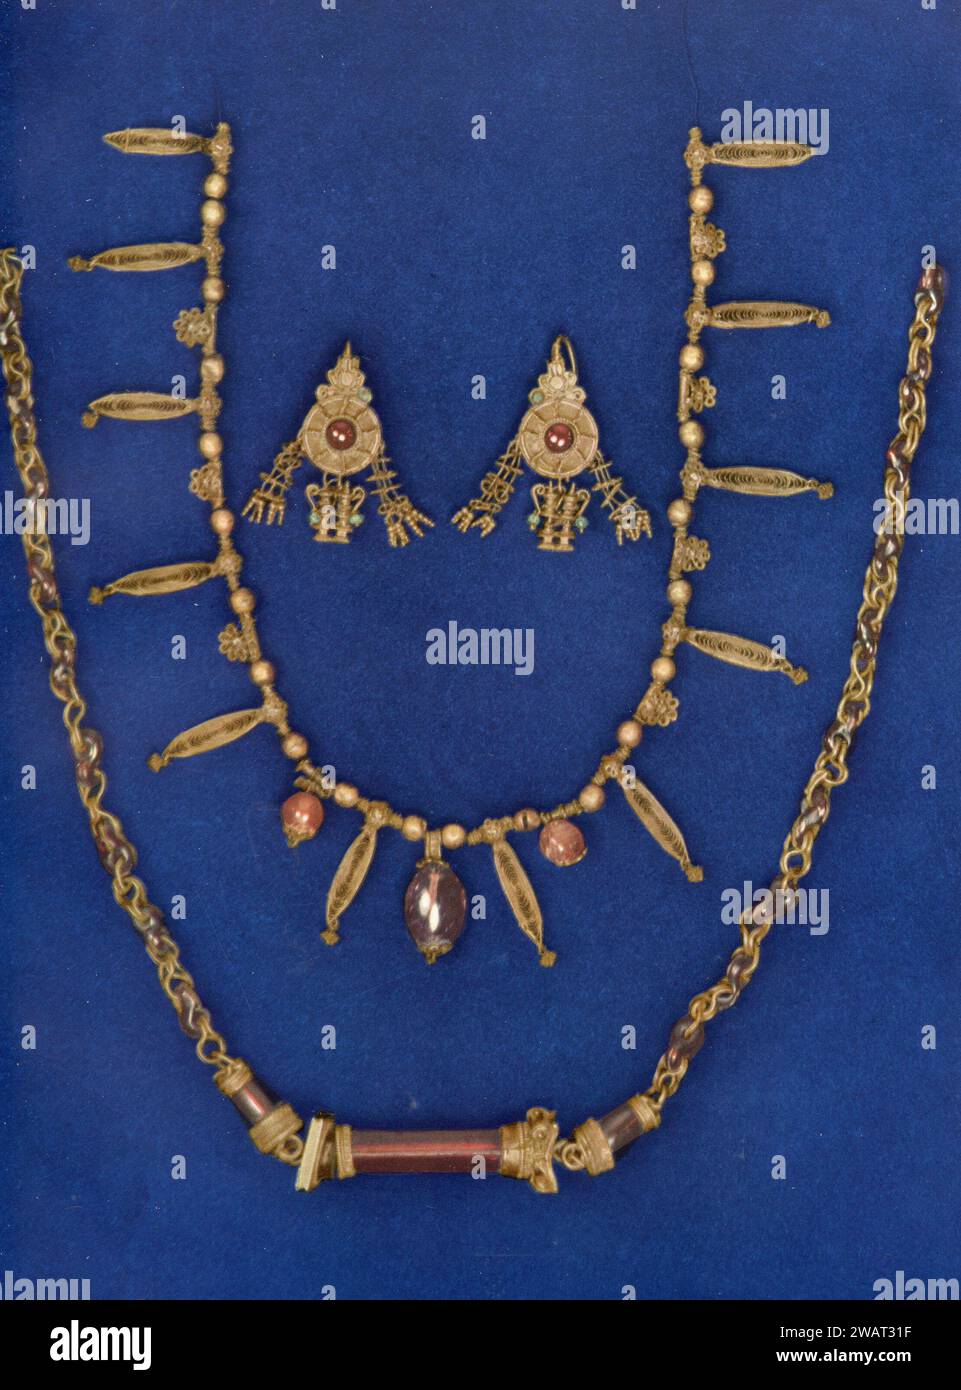 Ancient Greco-Roman jewelry: Necklace, Italy 1950s Stock Photo